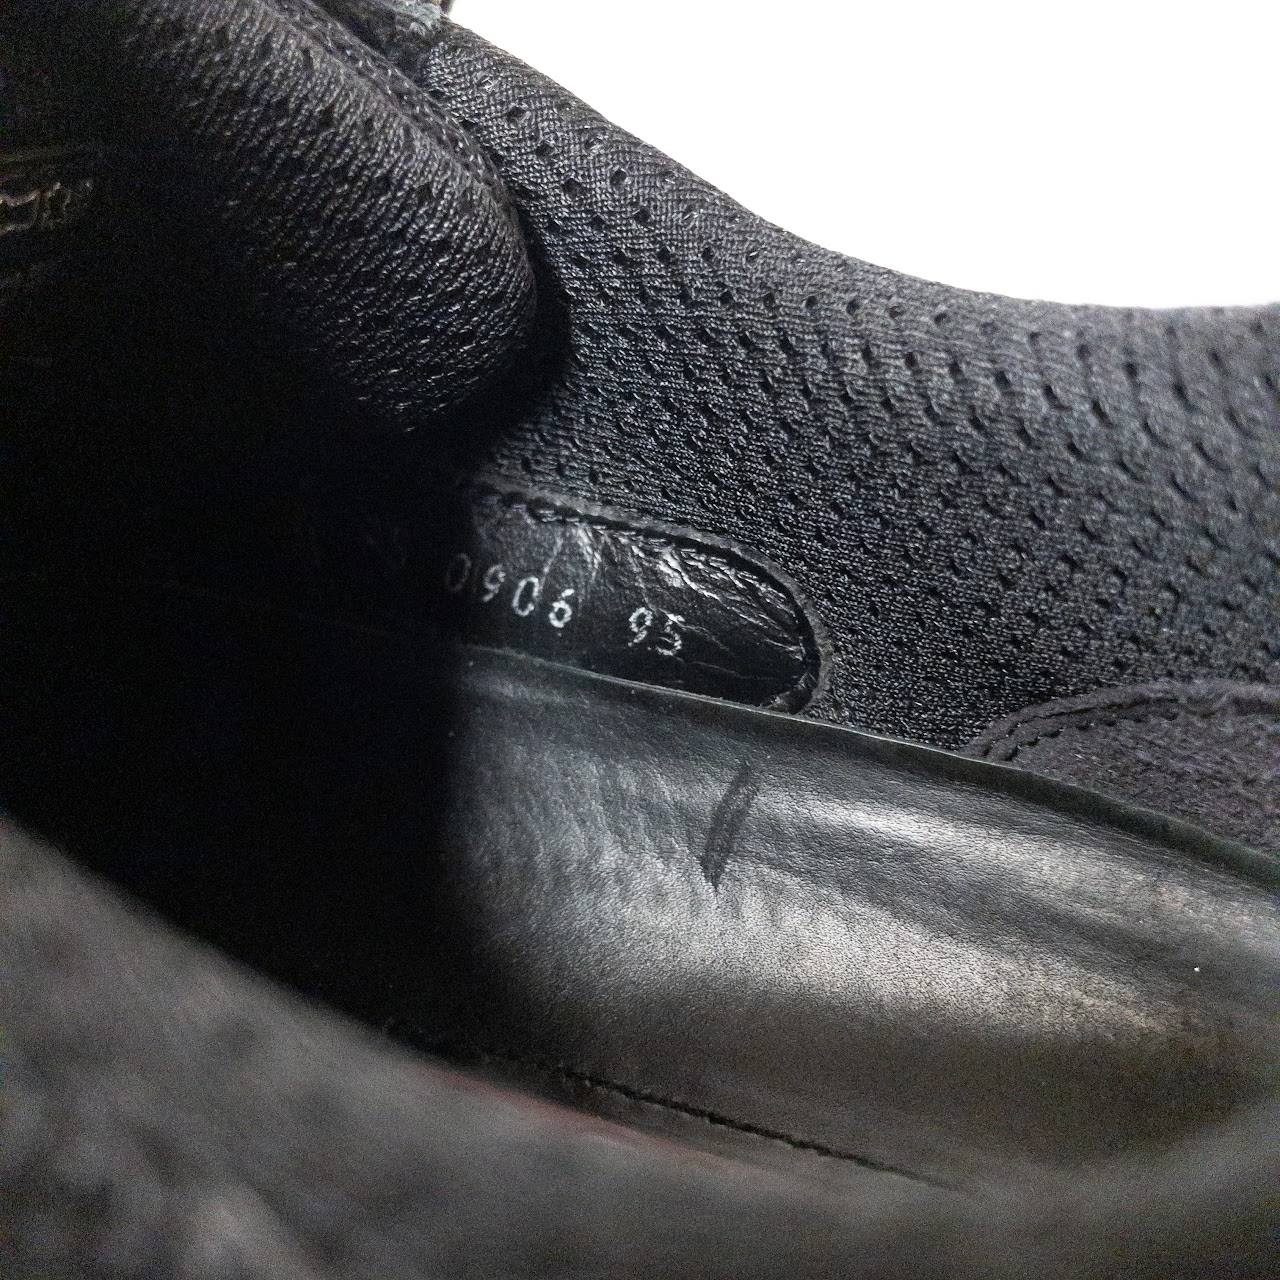 Prada Leather Sneakers